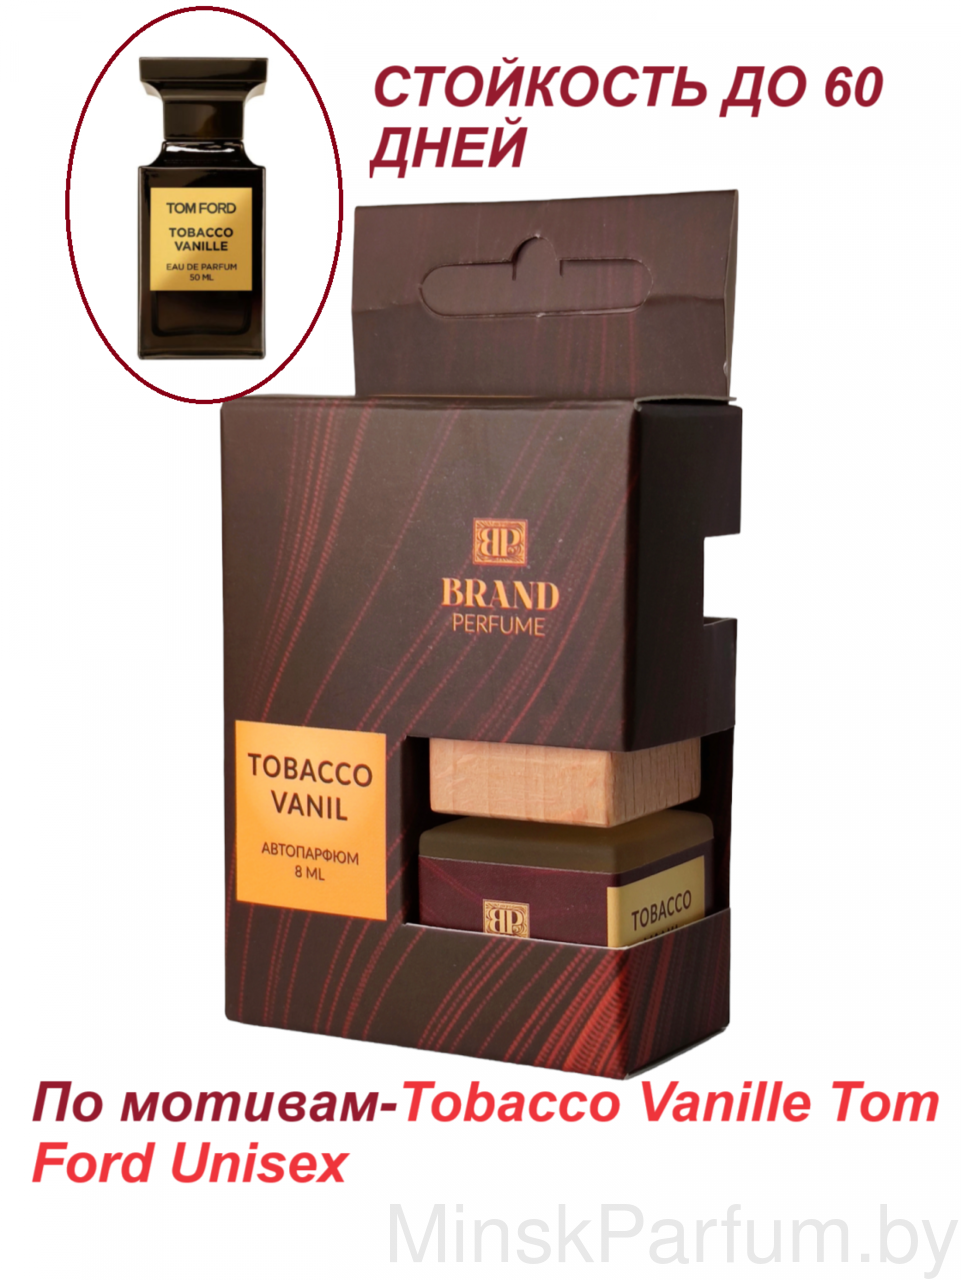 Автопарфюм Tobacco Vanil, 8 мл